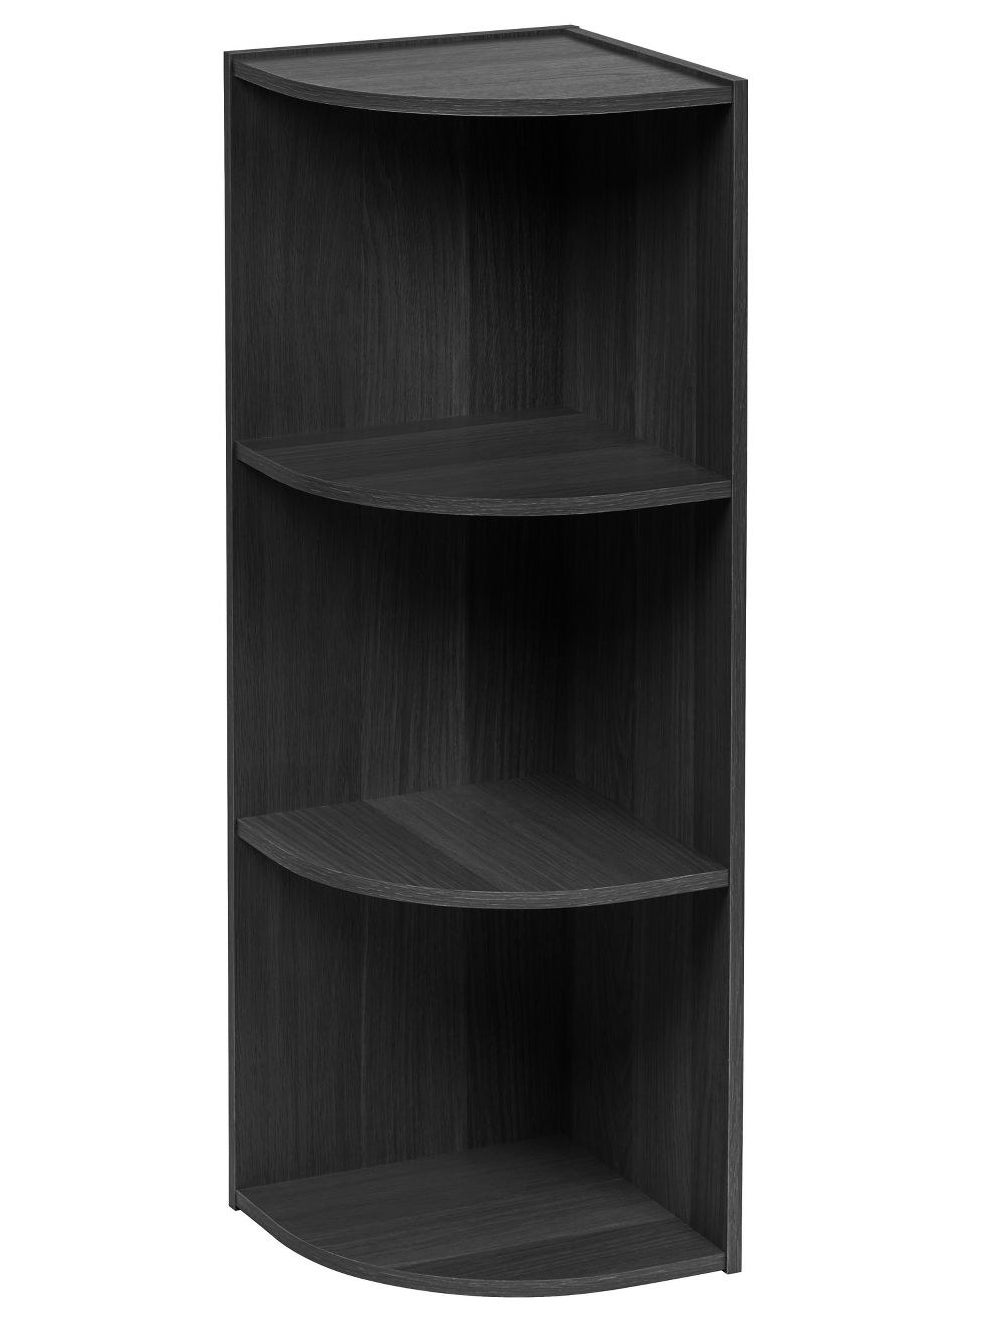 Black 3-tier shelf